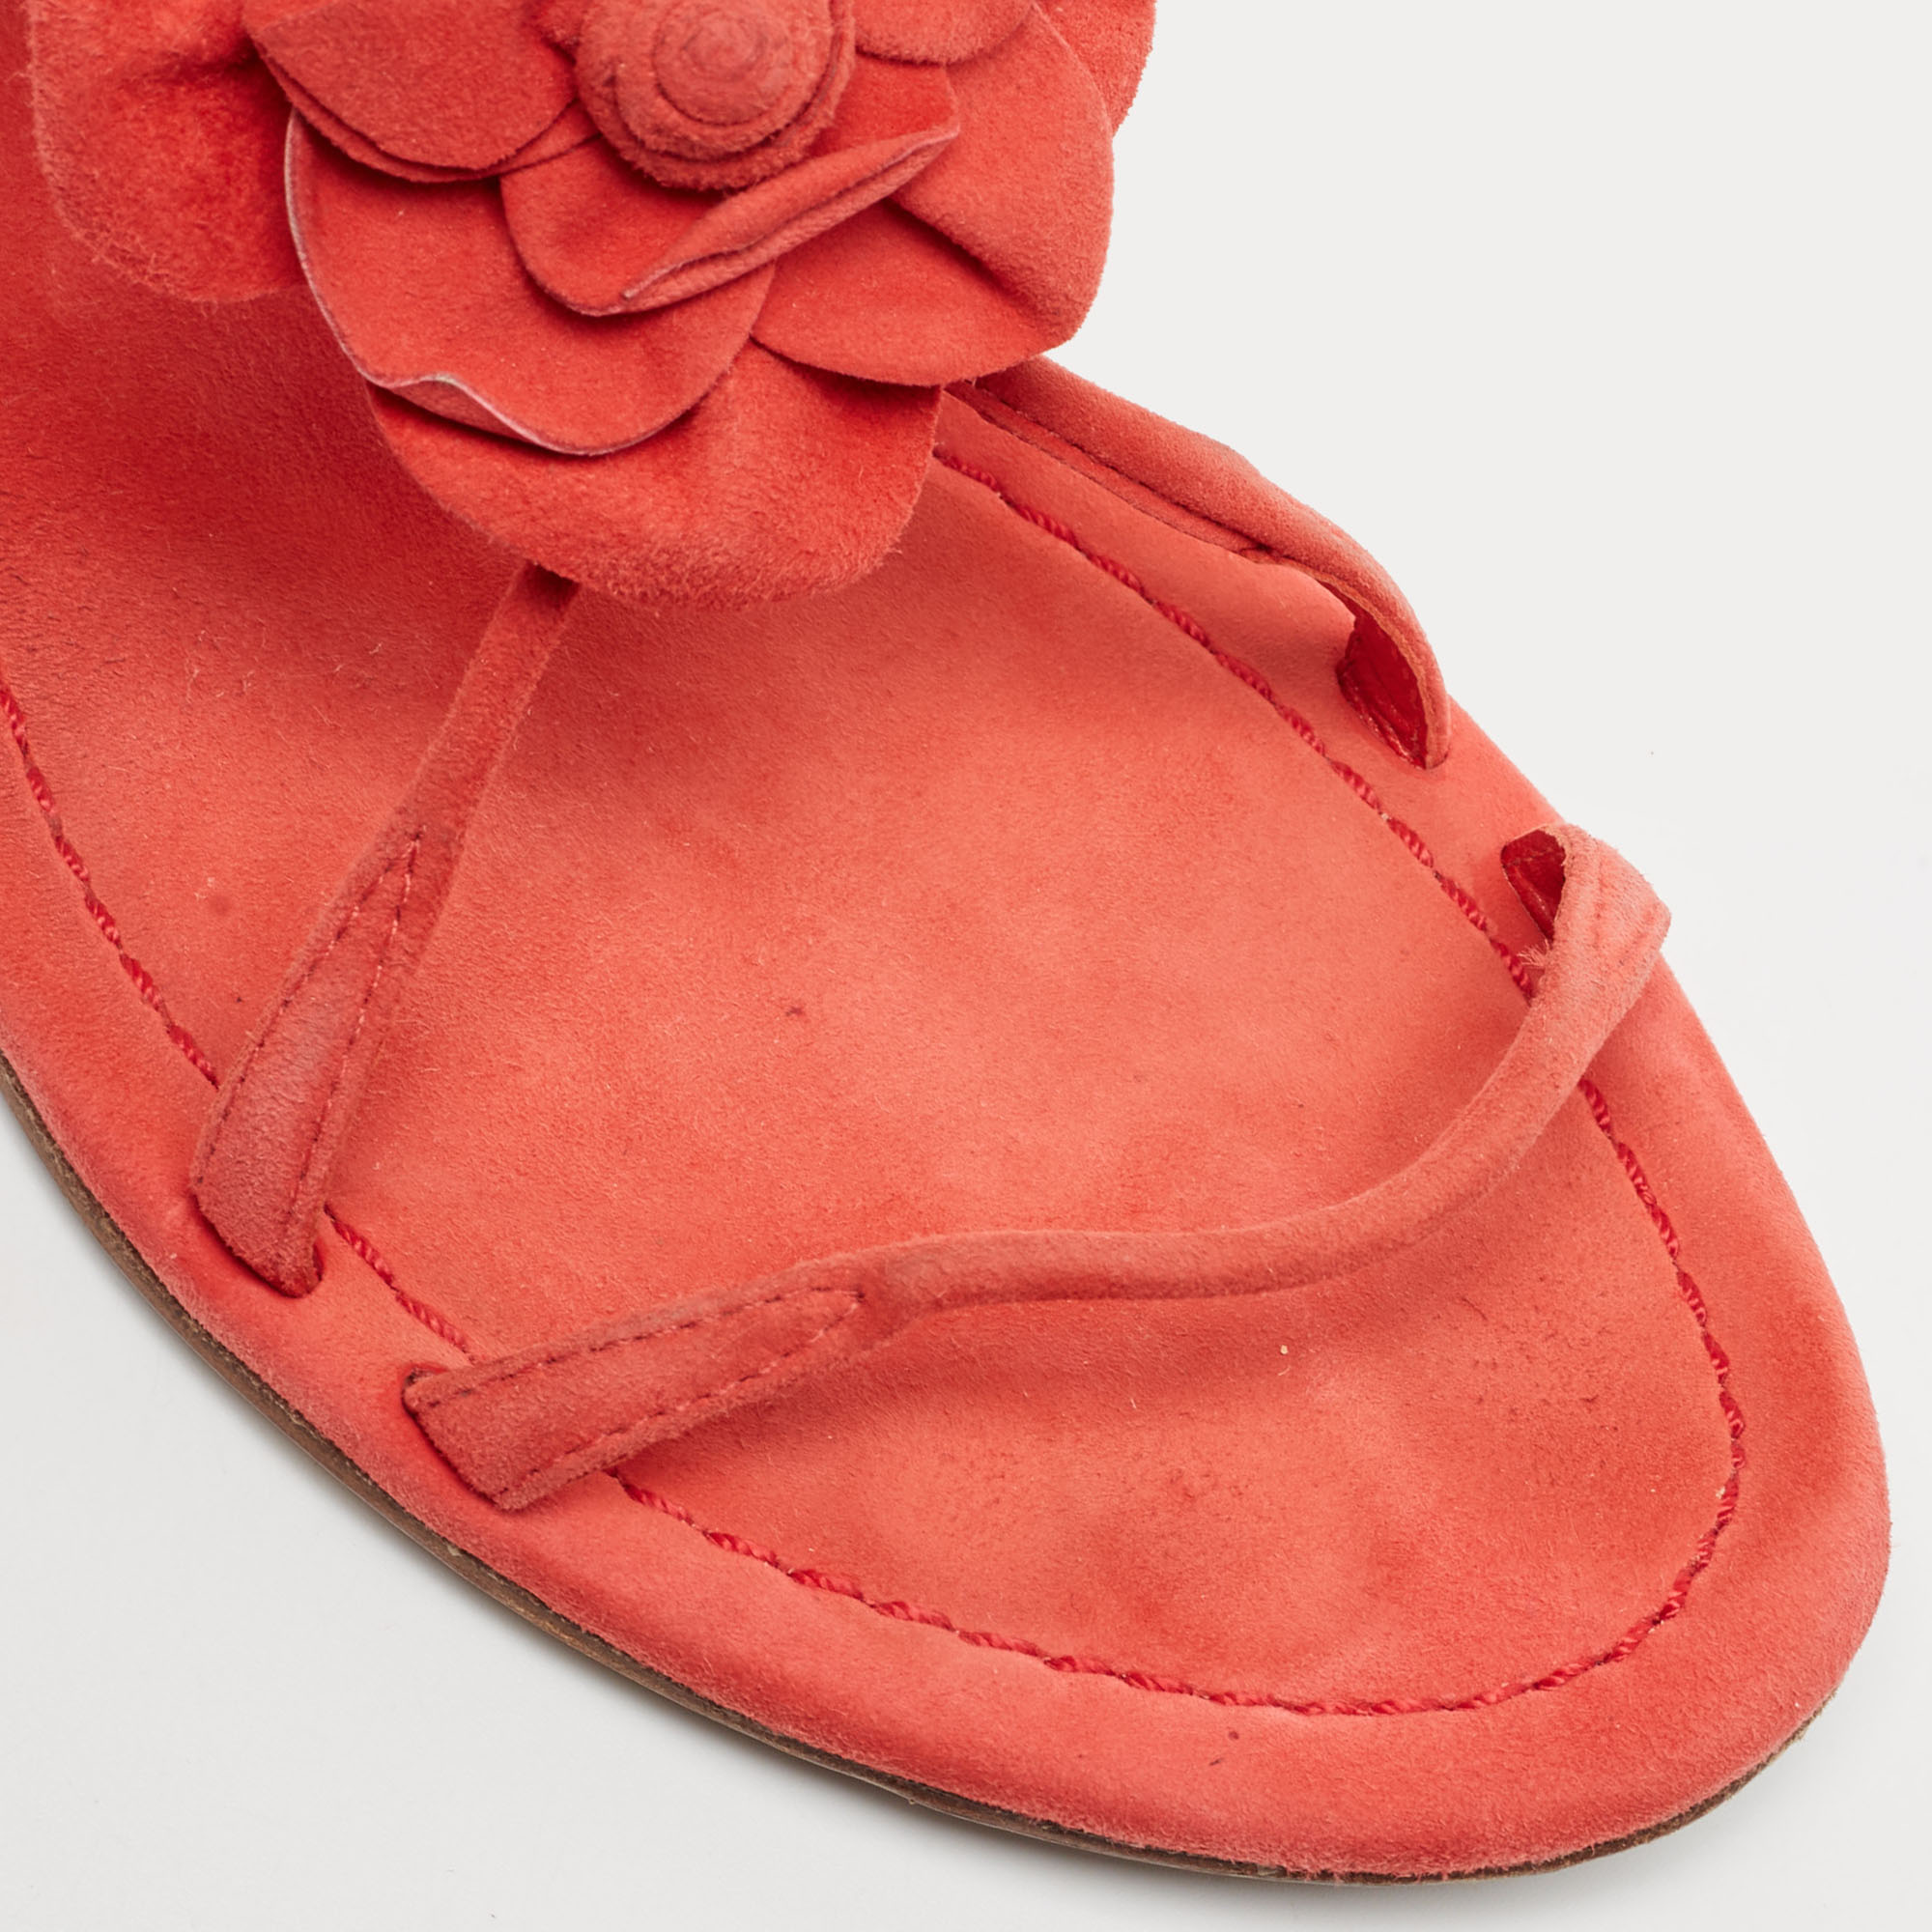 Prada Pink Suede Floral Applique Flat Sandals Size 37.5